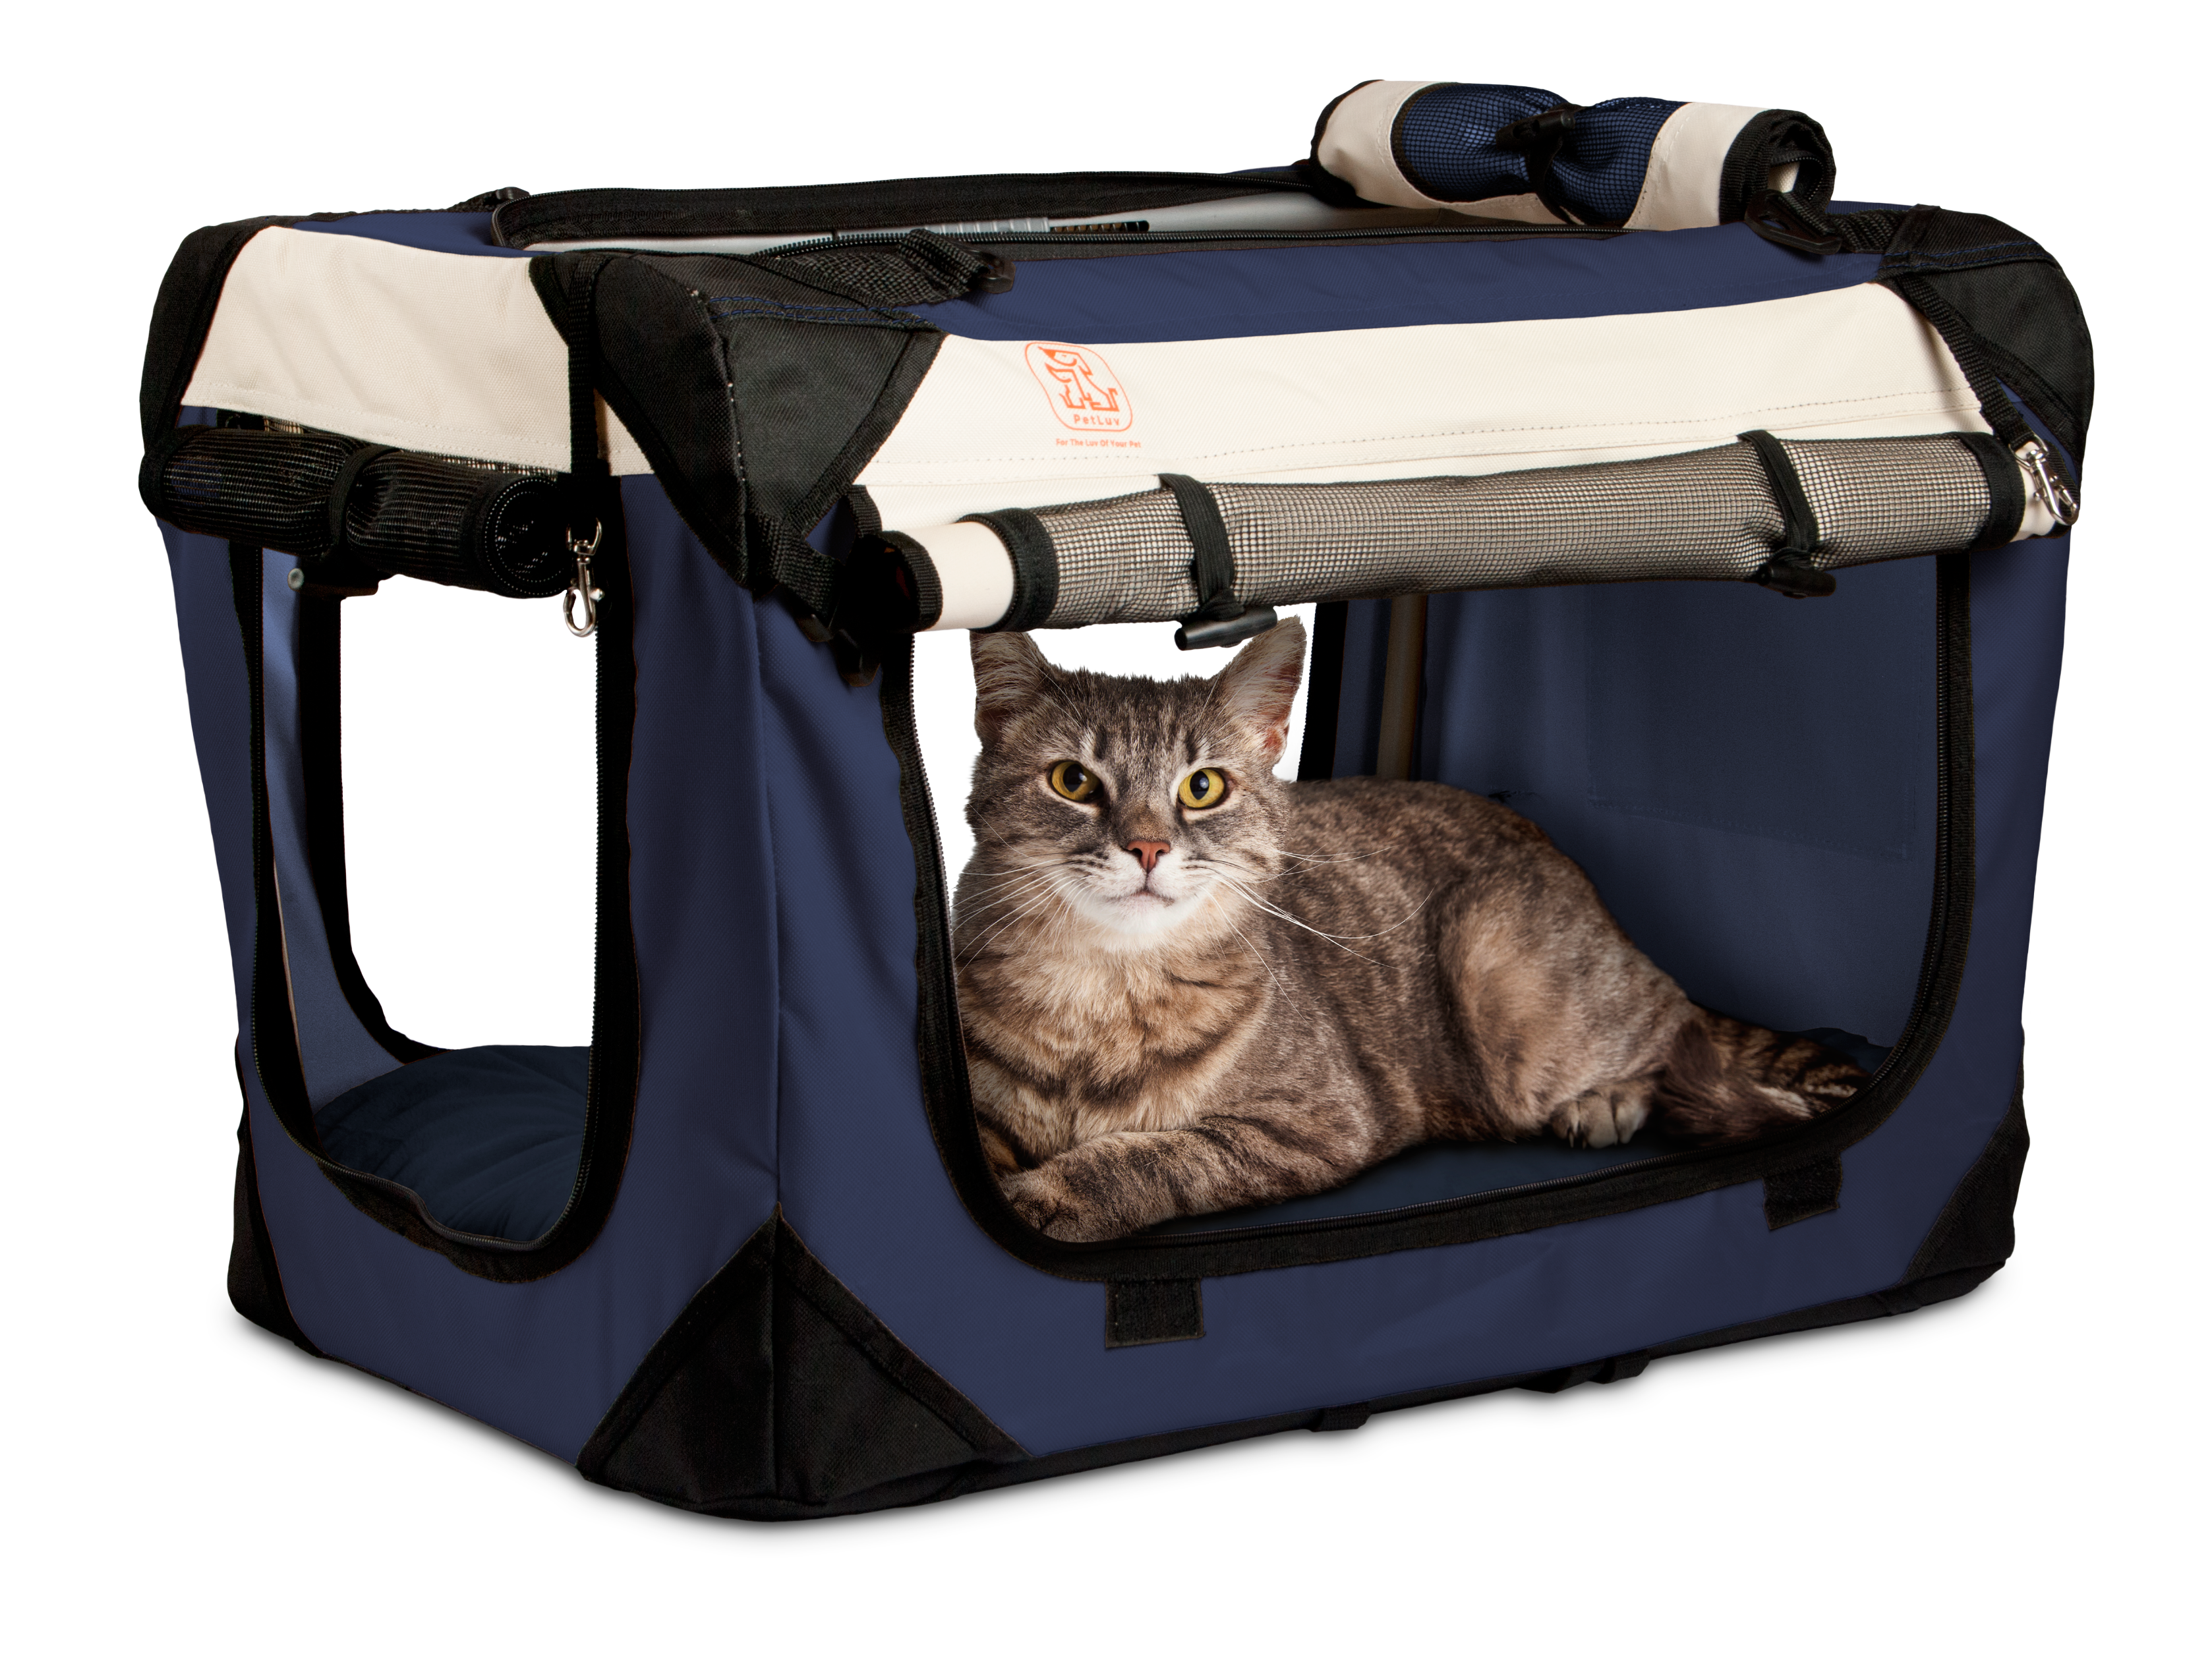 Premium cat dog pet carrier for comfortable travel